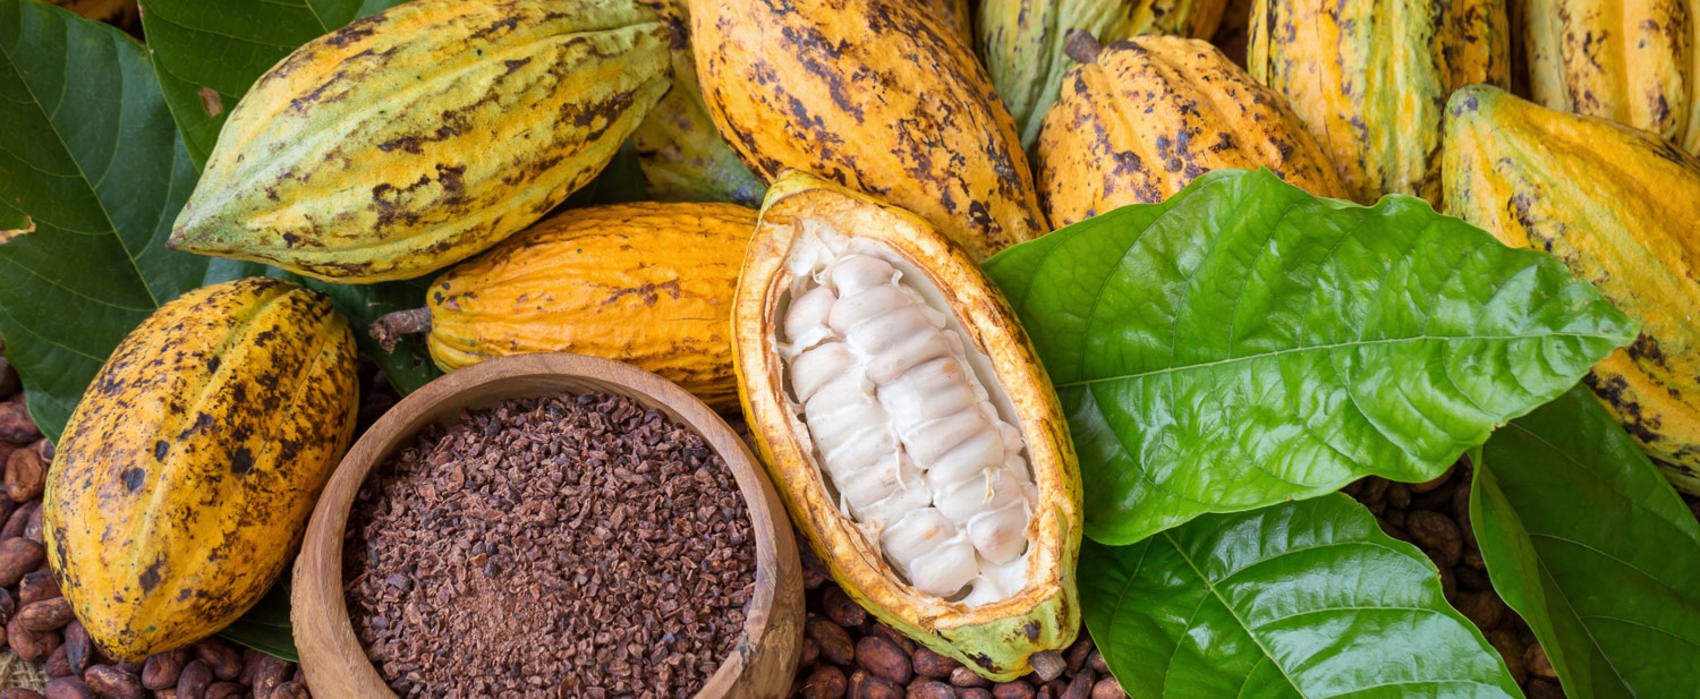 Disease, smuggling cut Ghana’s cocoa output